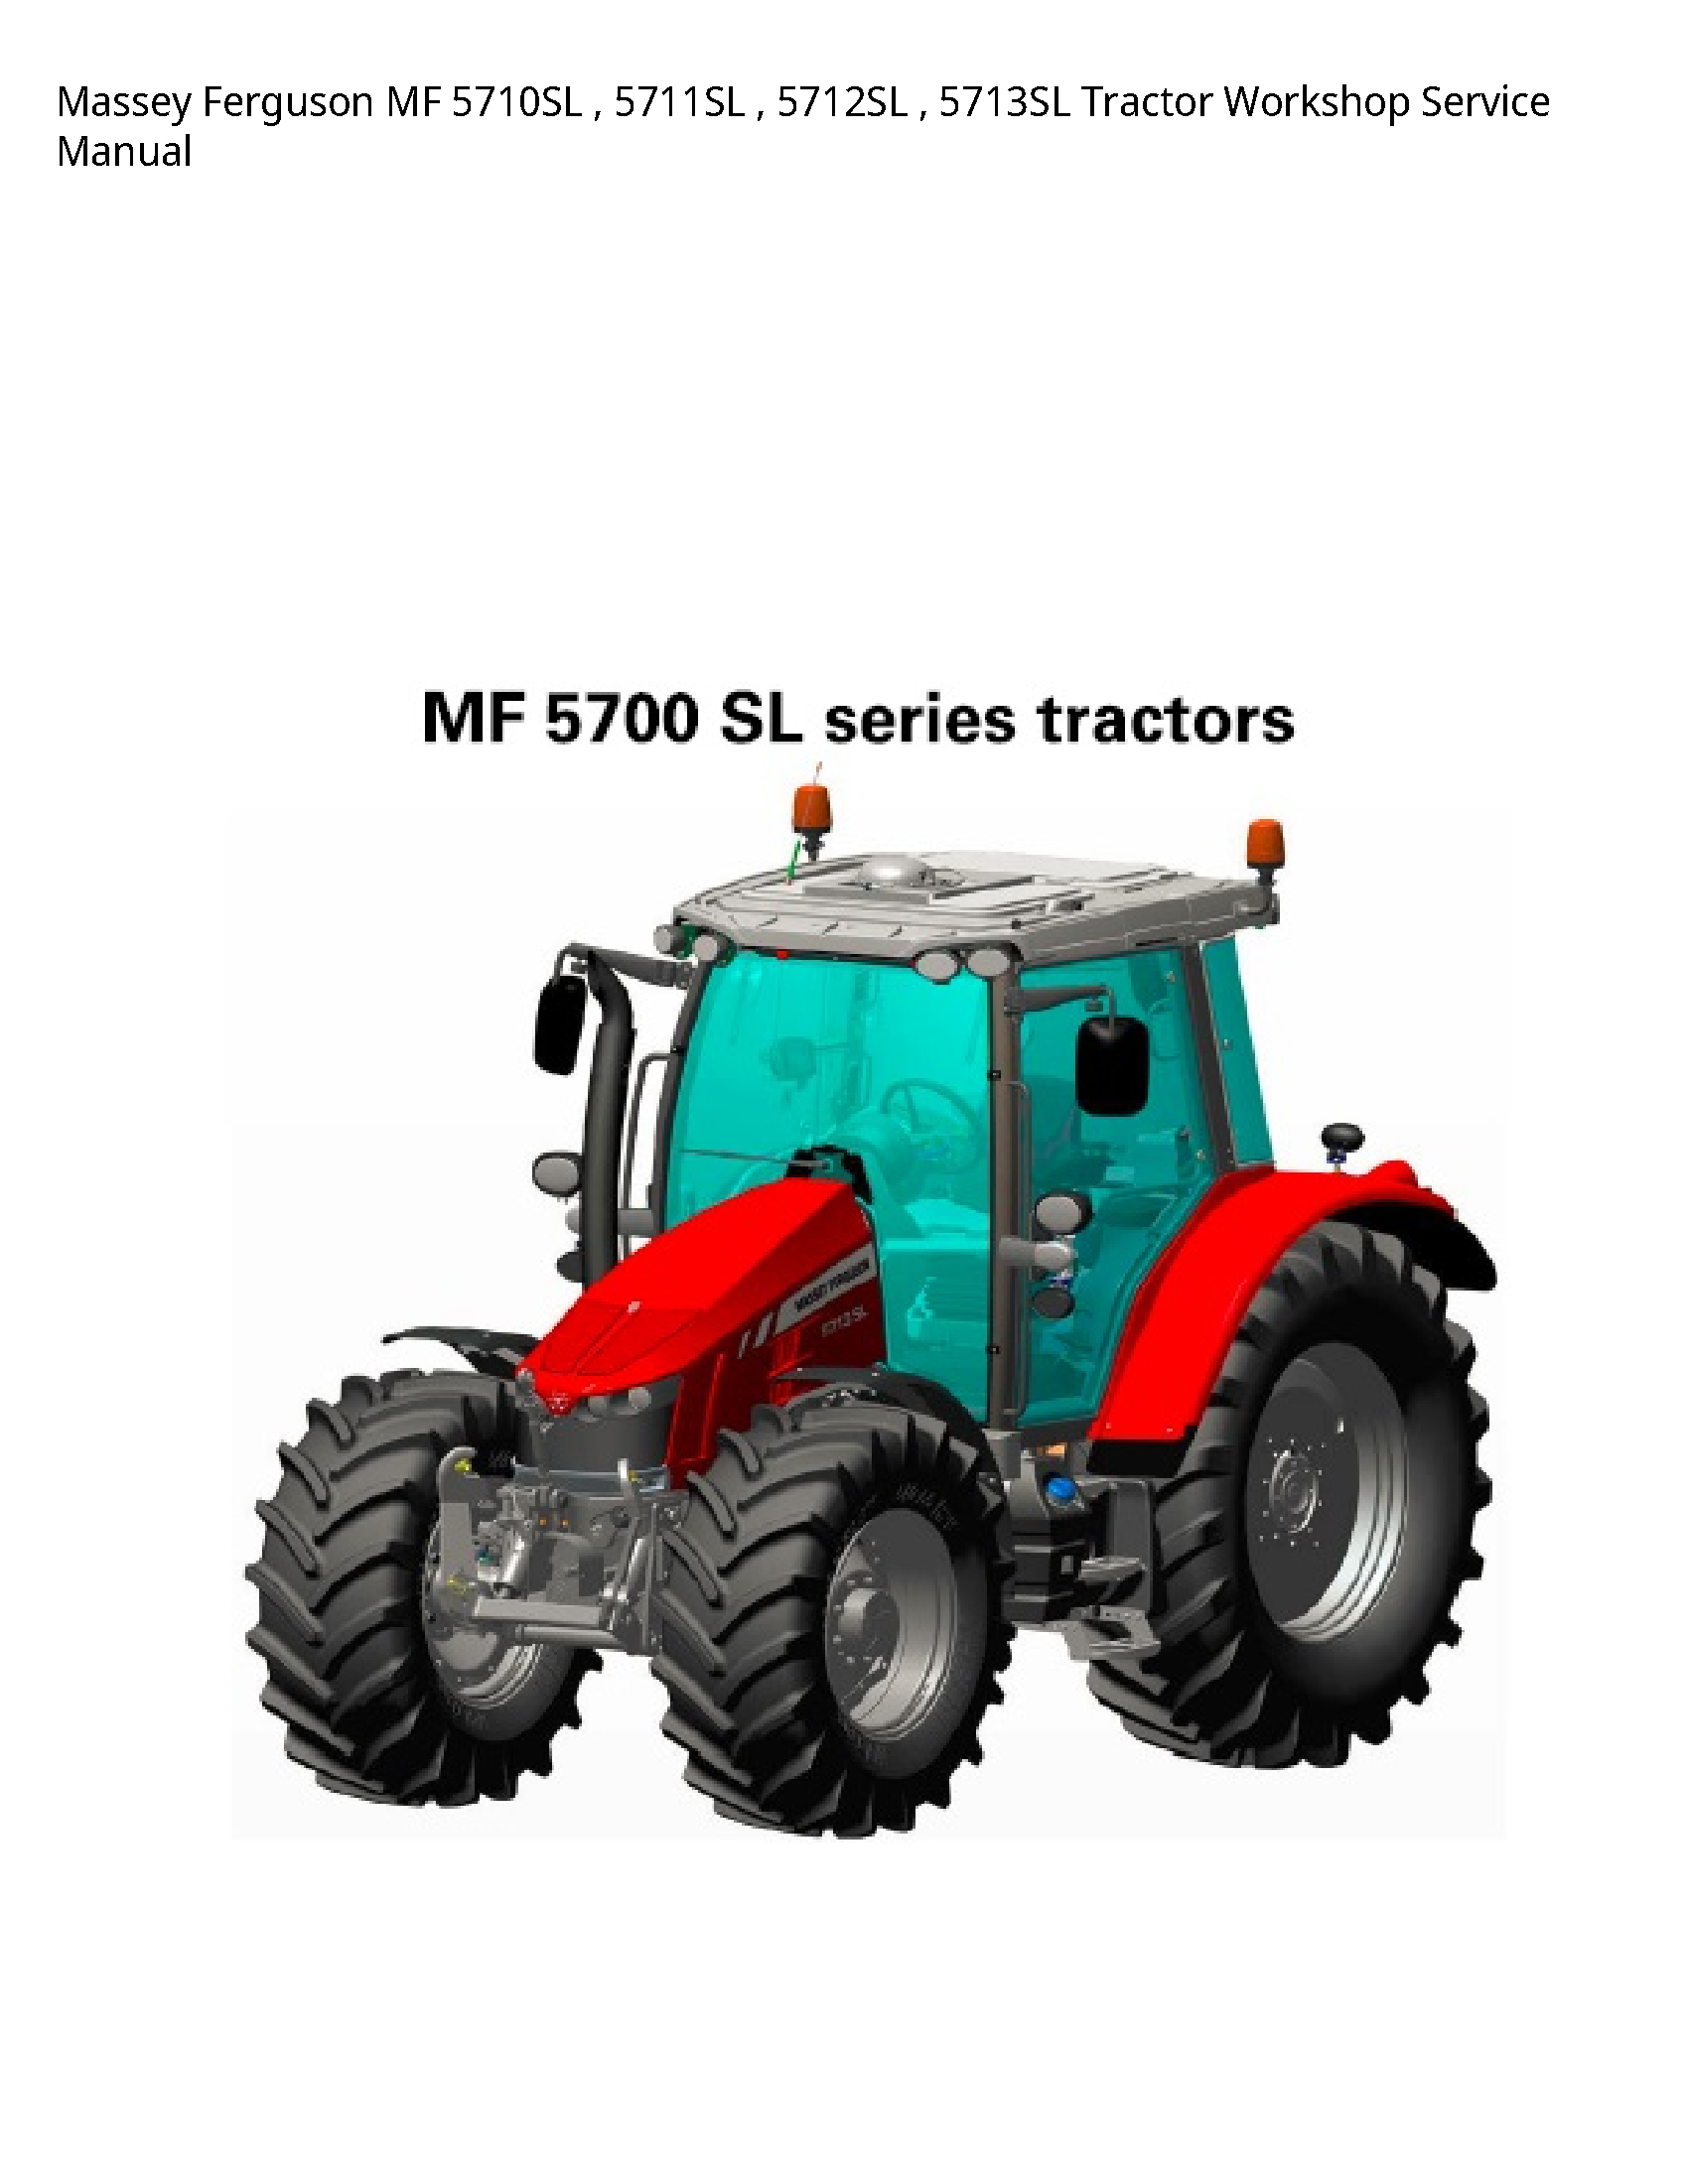 Massey Ferguson 5710SL MF Tractor Service manual